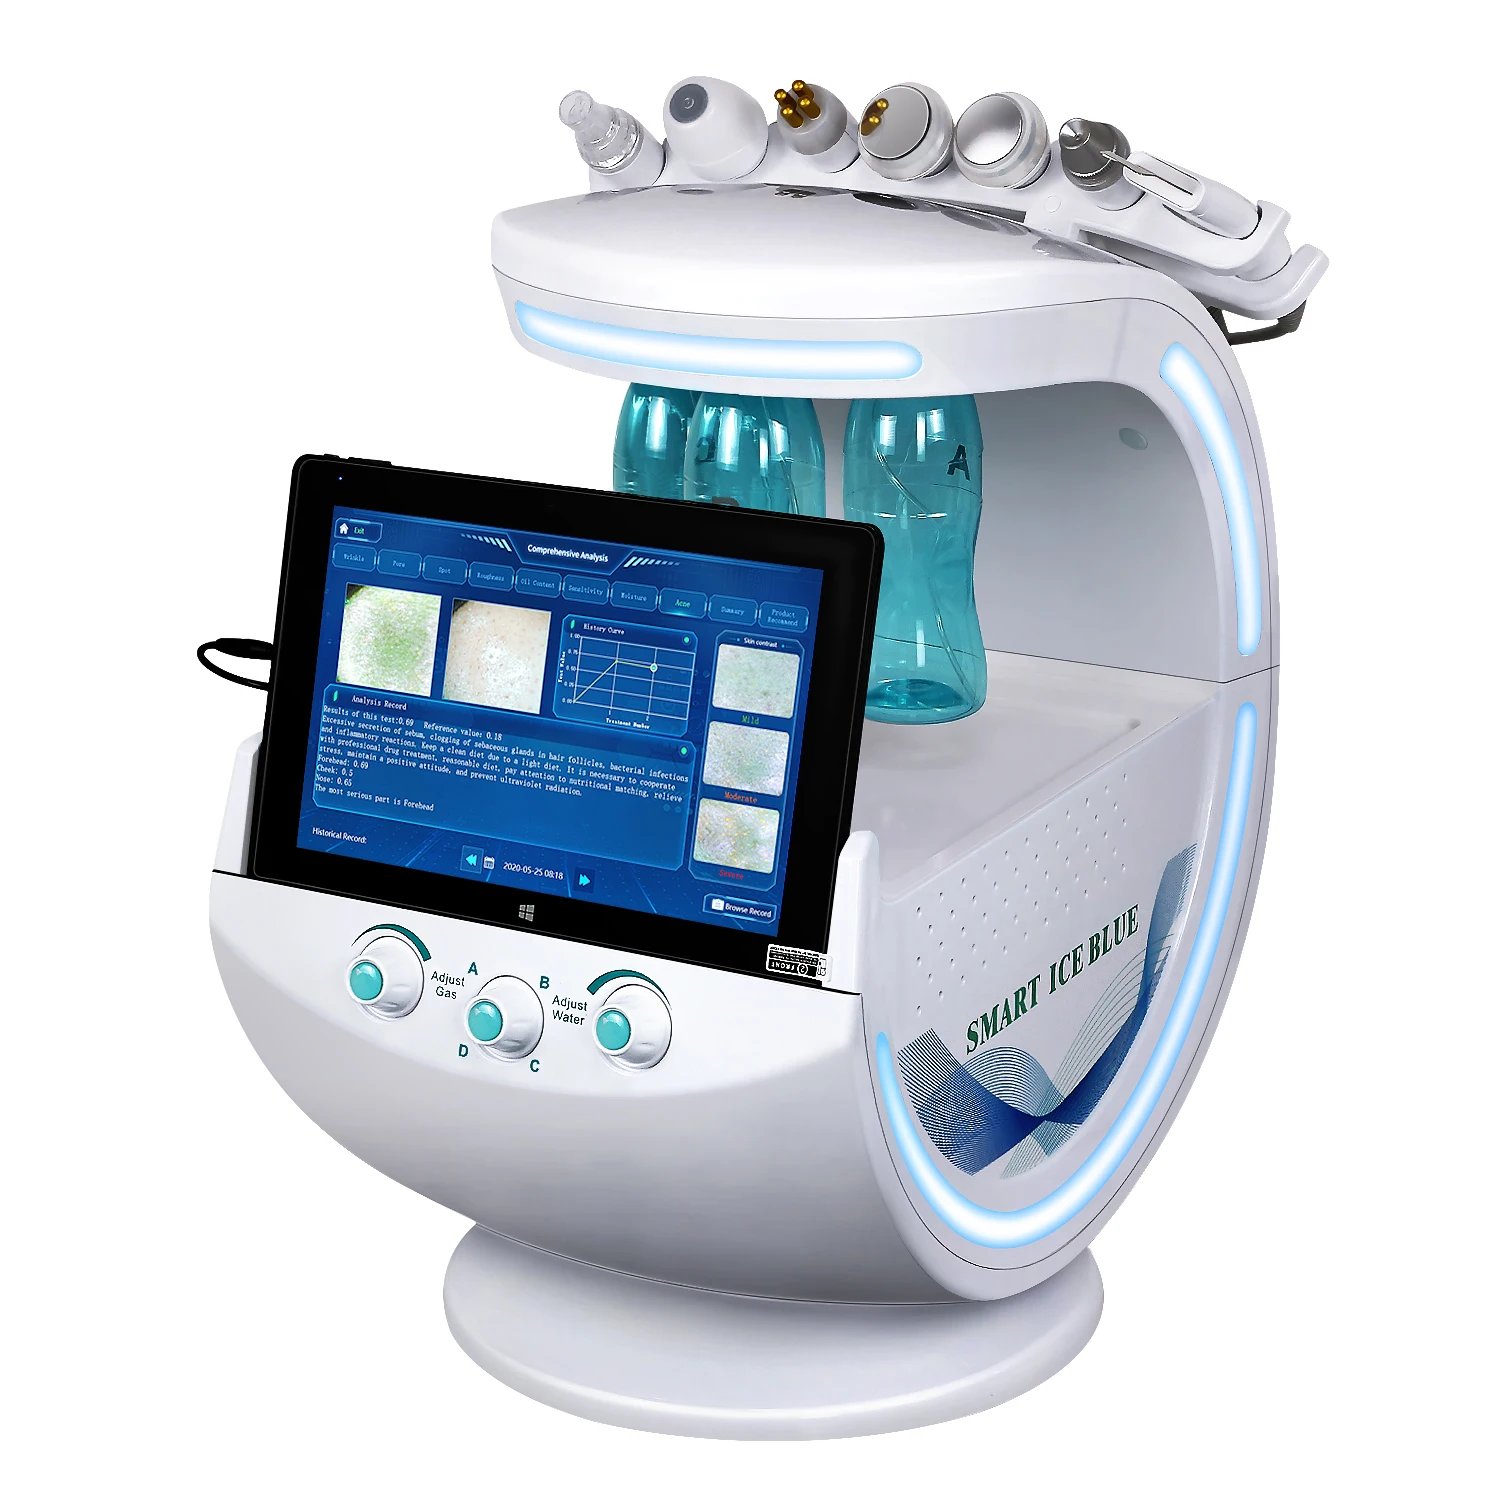 Professional Ultrasound Ice Blue Microdermabrasion Oxygene Hydrafacial Machine Skin Care Cryotherapy Skin Analyzer